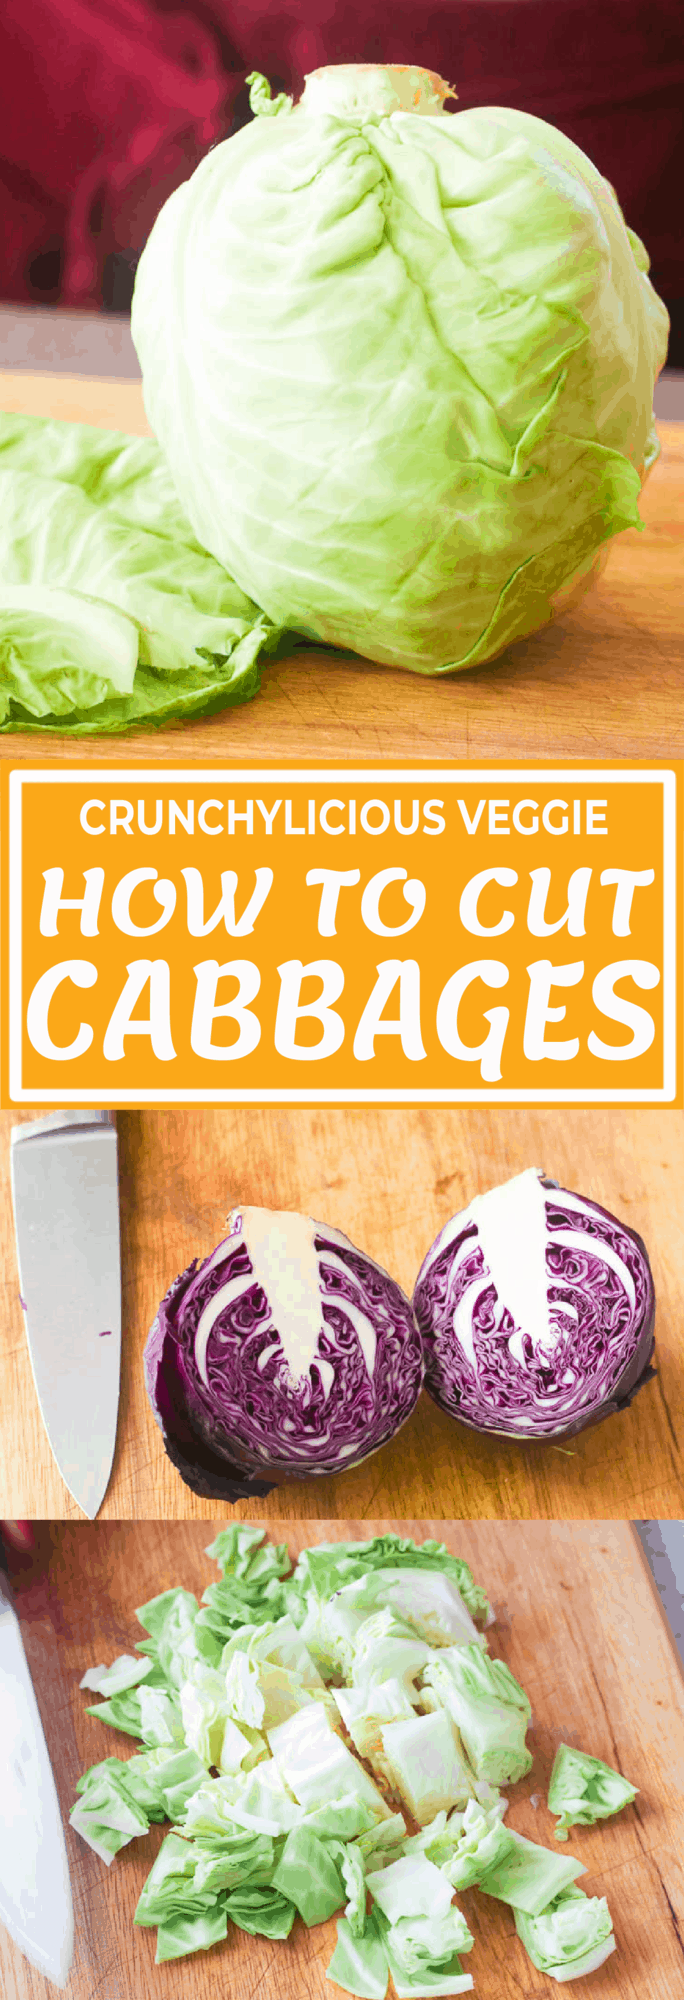 Cabbage cuts